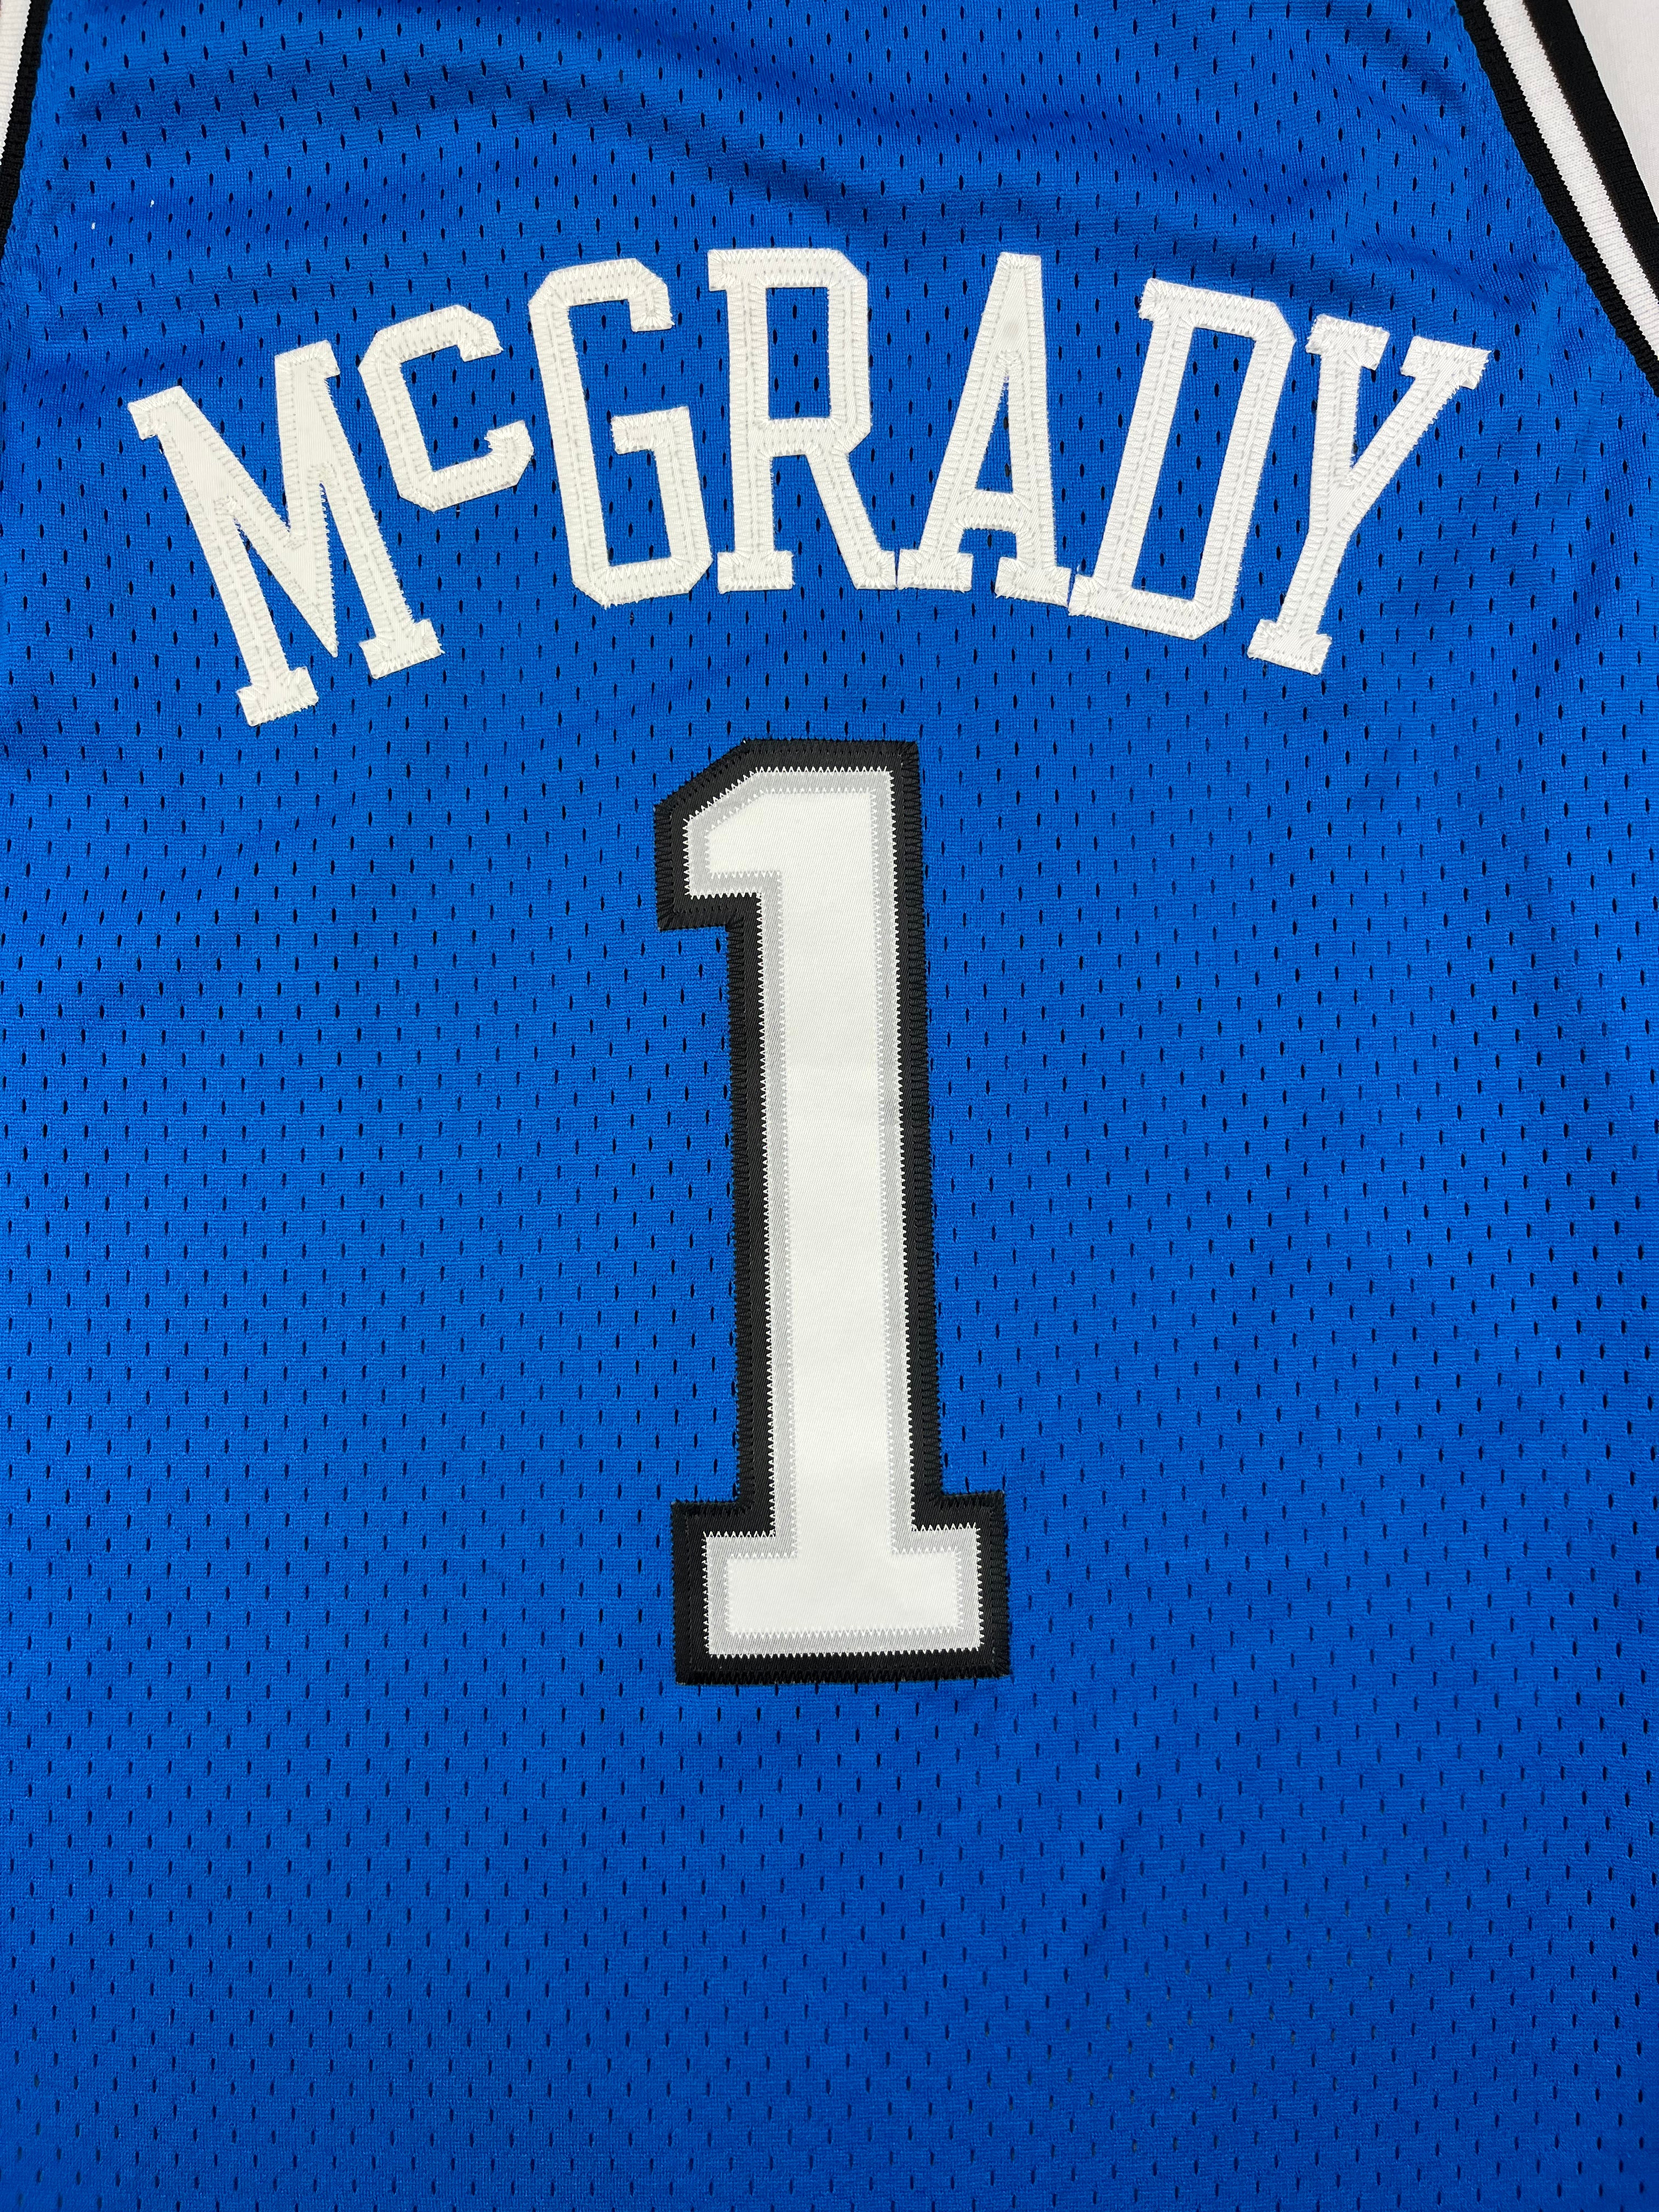 2003-04 Orlando Magic Nike Swingman Road Jersey McGrady #1 (XXL) 9/10